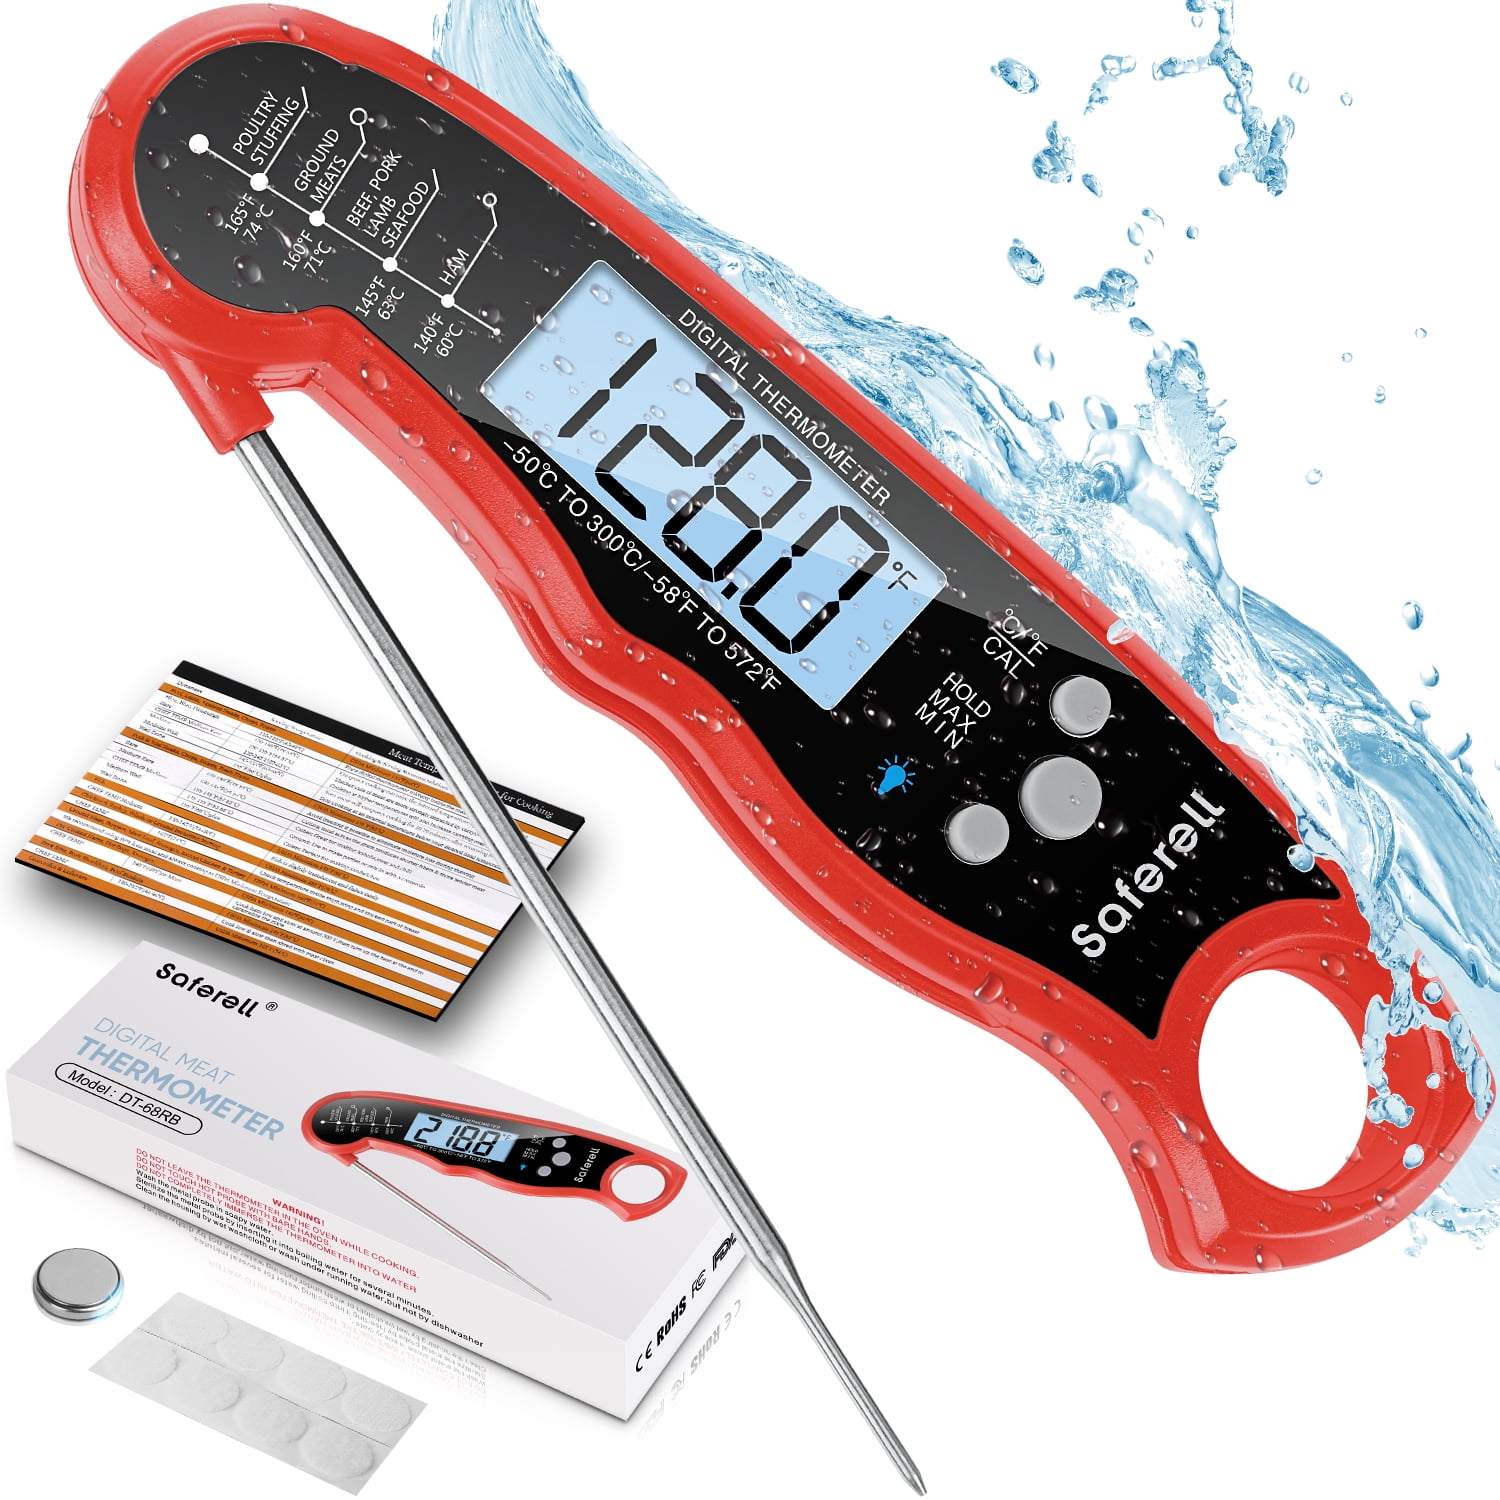 DT-02 Slim Digital Instant Read Probe Thermometer